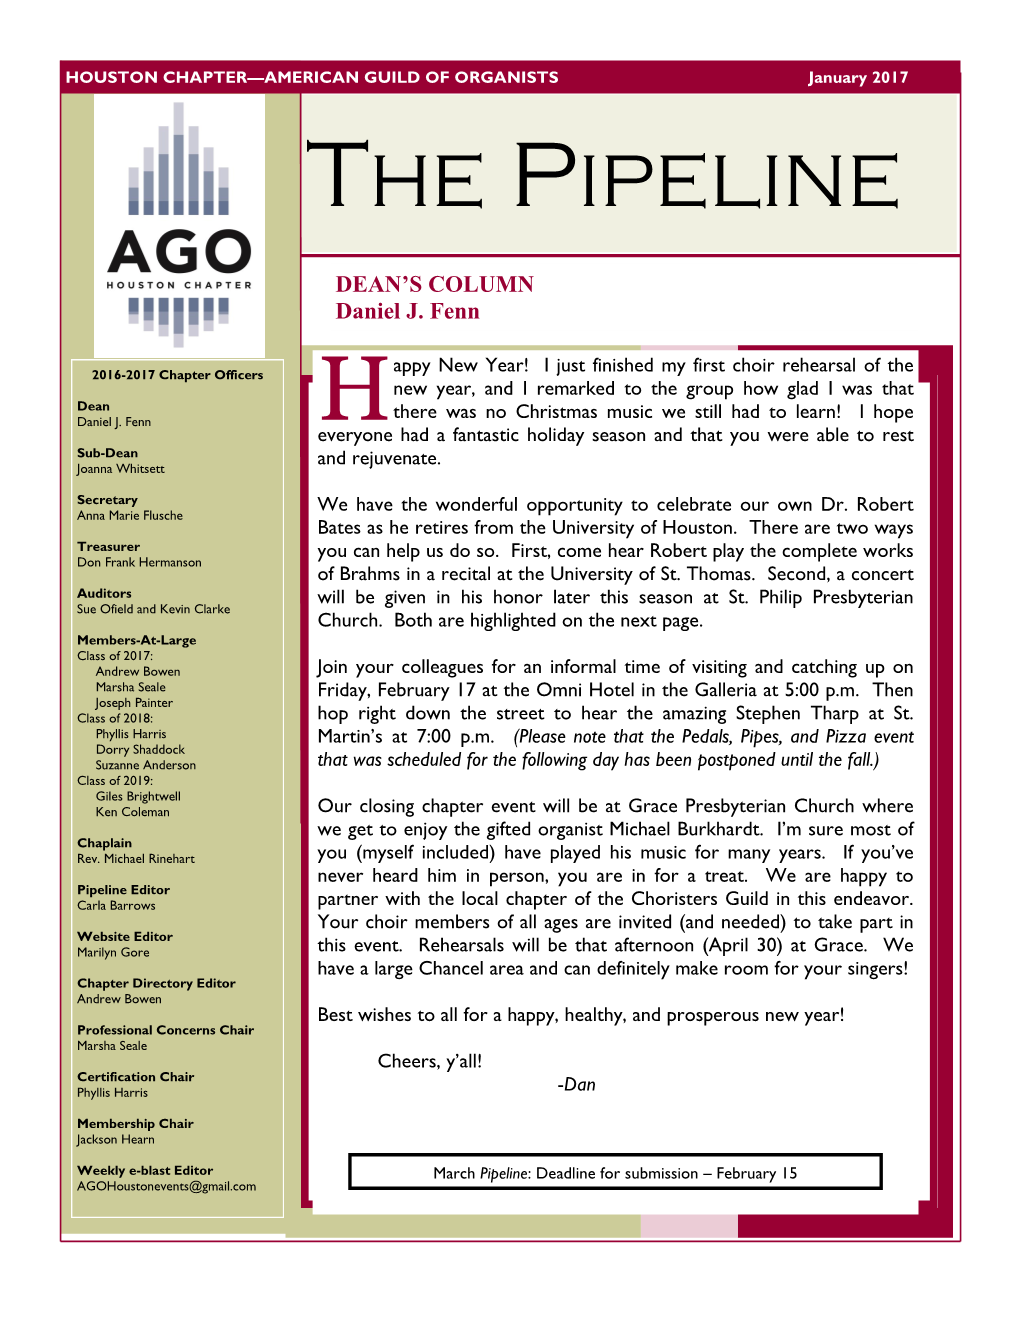 January – February 2017 Pipeline